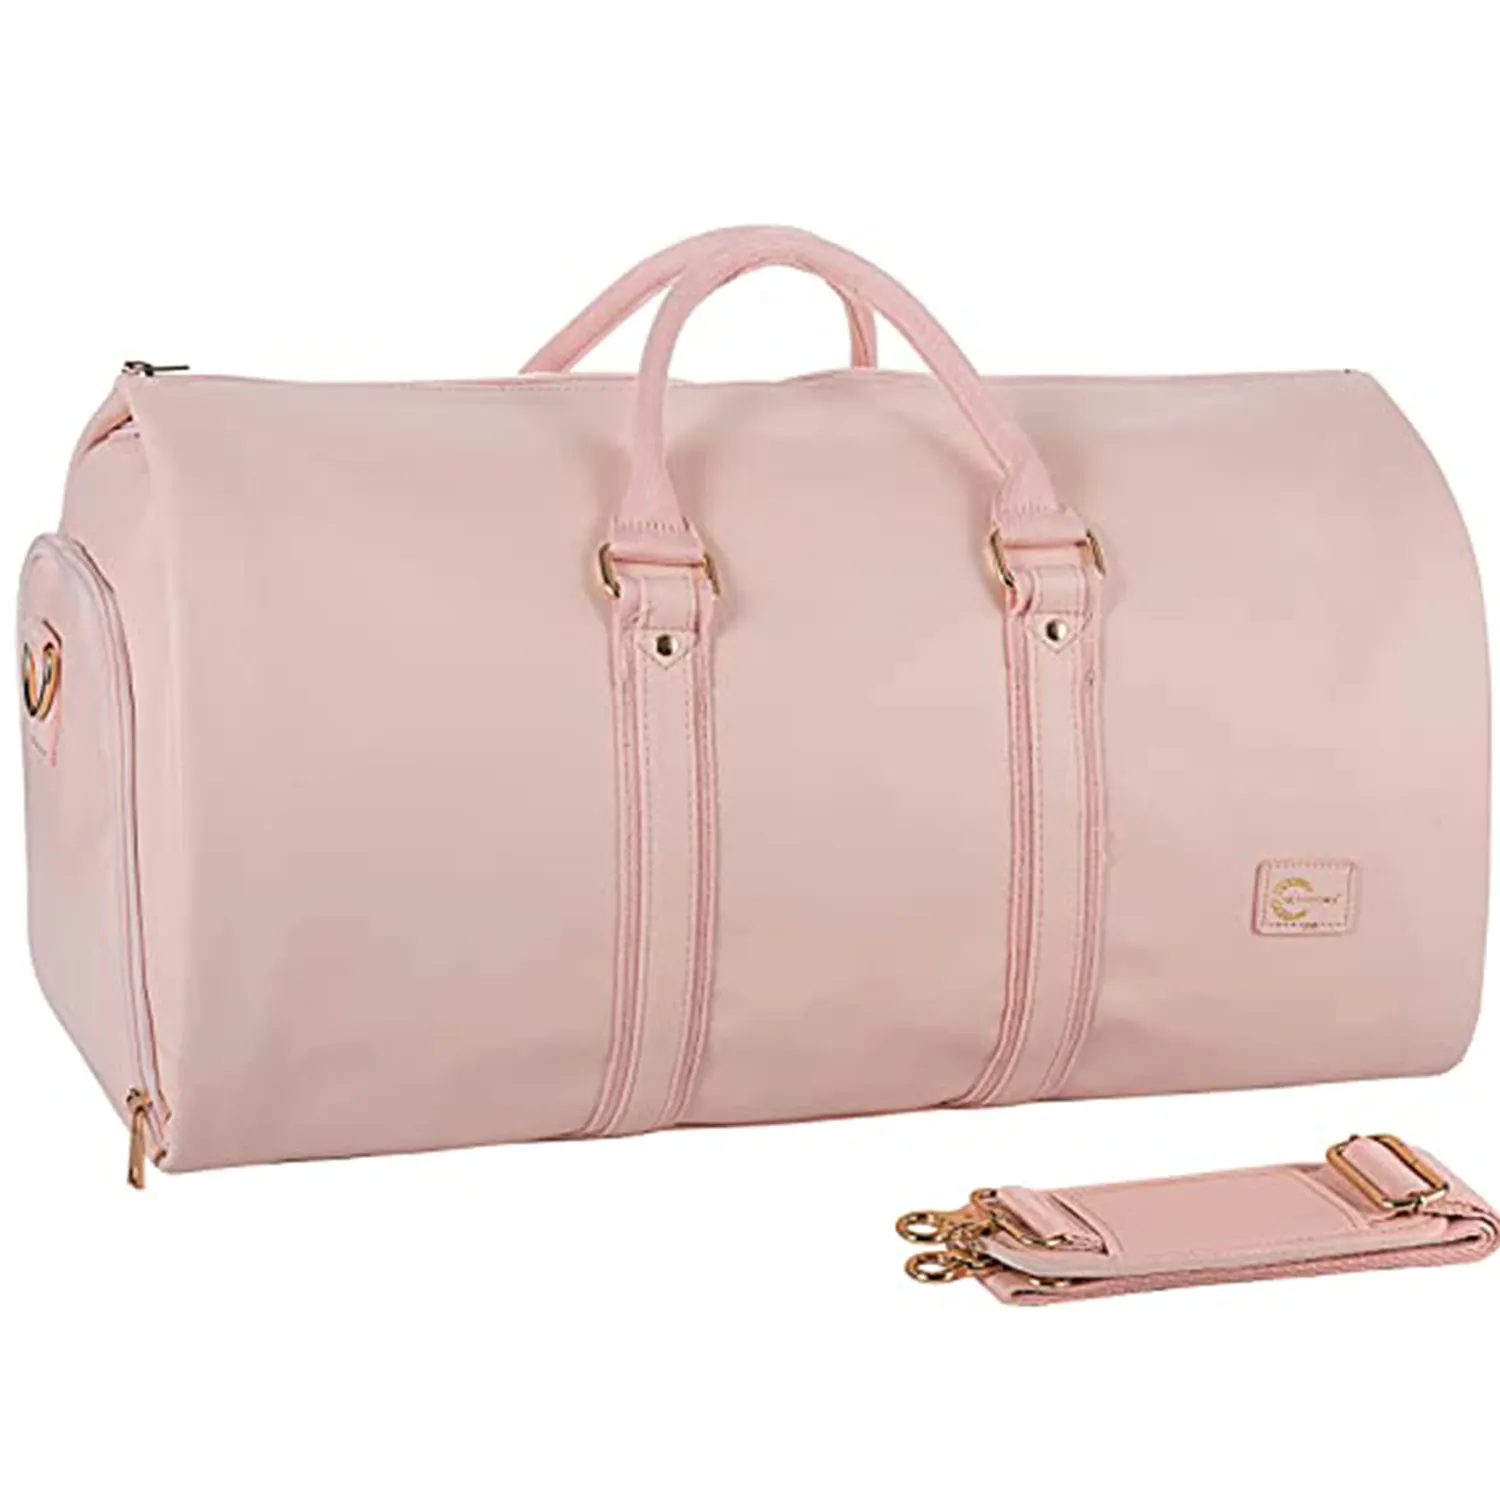 Custom Convertible Garment Bag for Women Suit Bag Leather Travel Duffel Bas Women Carry on Garment Bags Pink